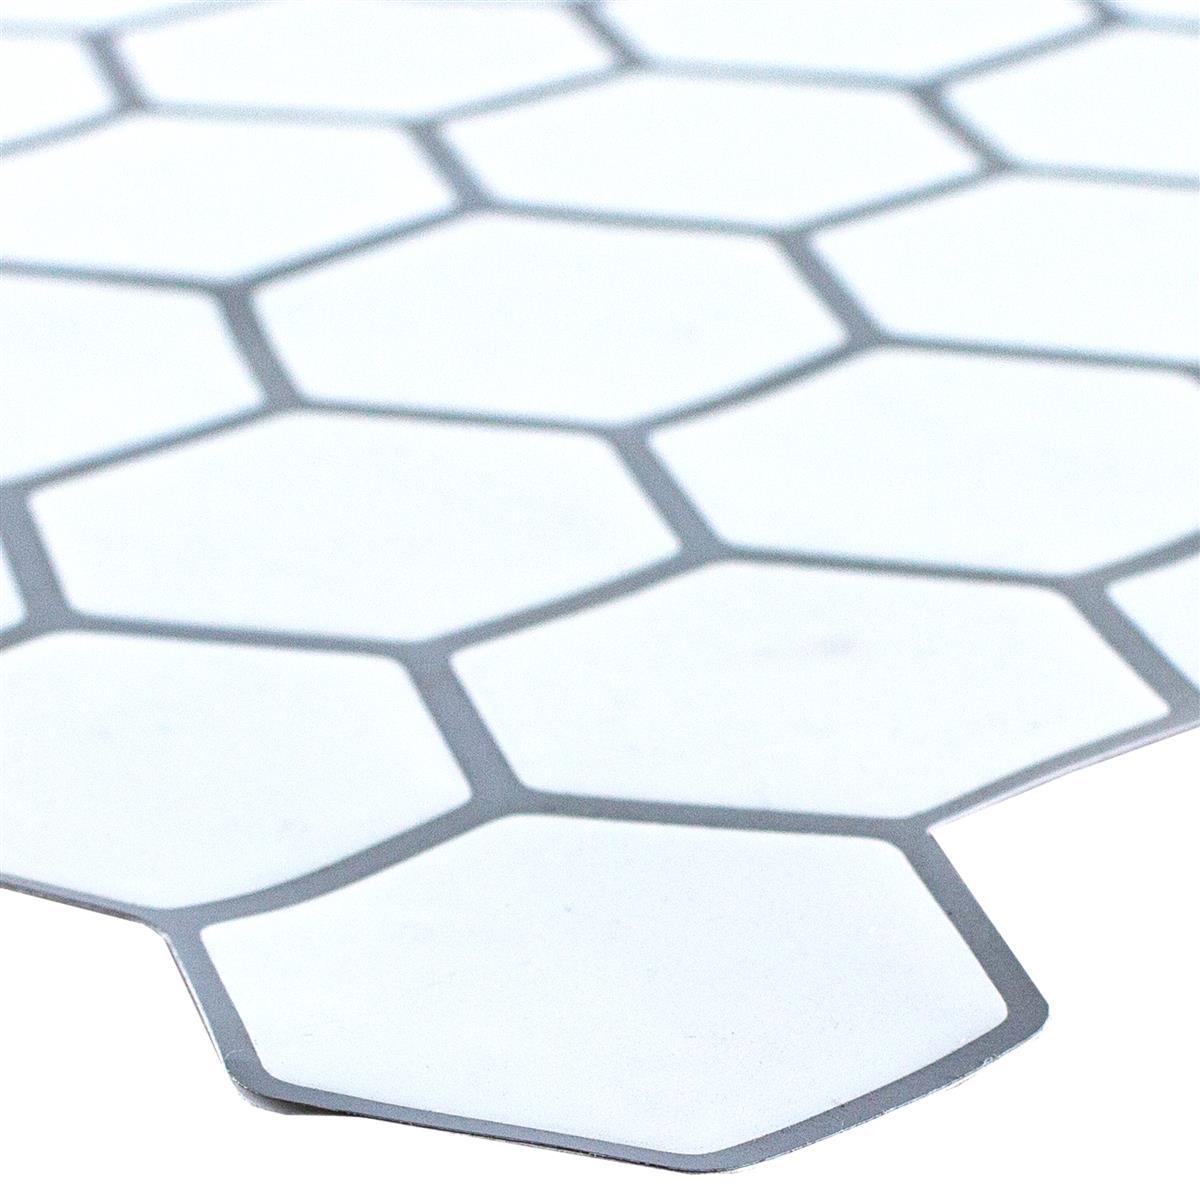 Vinyl Mosaic Tiles Edinburg Hexagon Blanc Self Adhesive